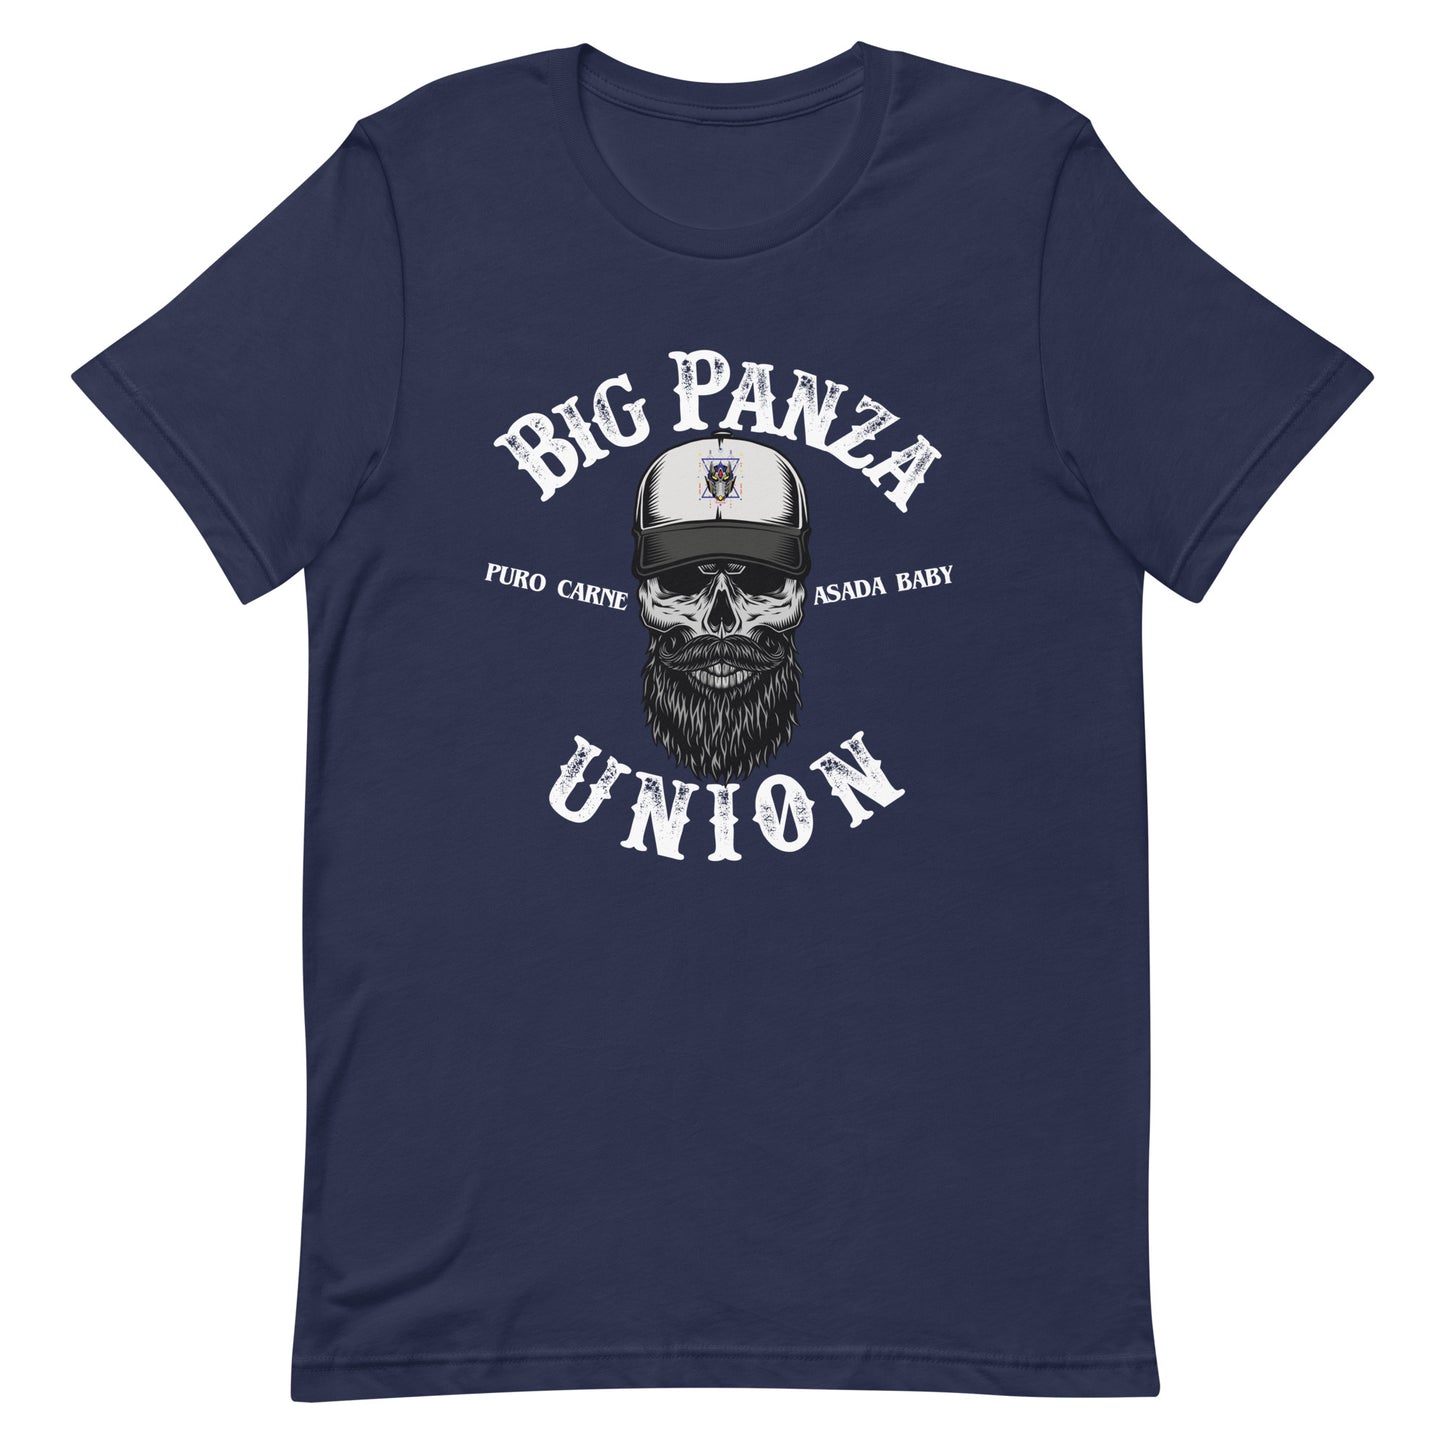 Big Panza Union Puro Carne ASADA Baby Chingon T-shirt Premium